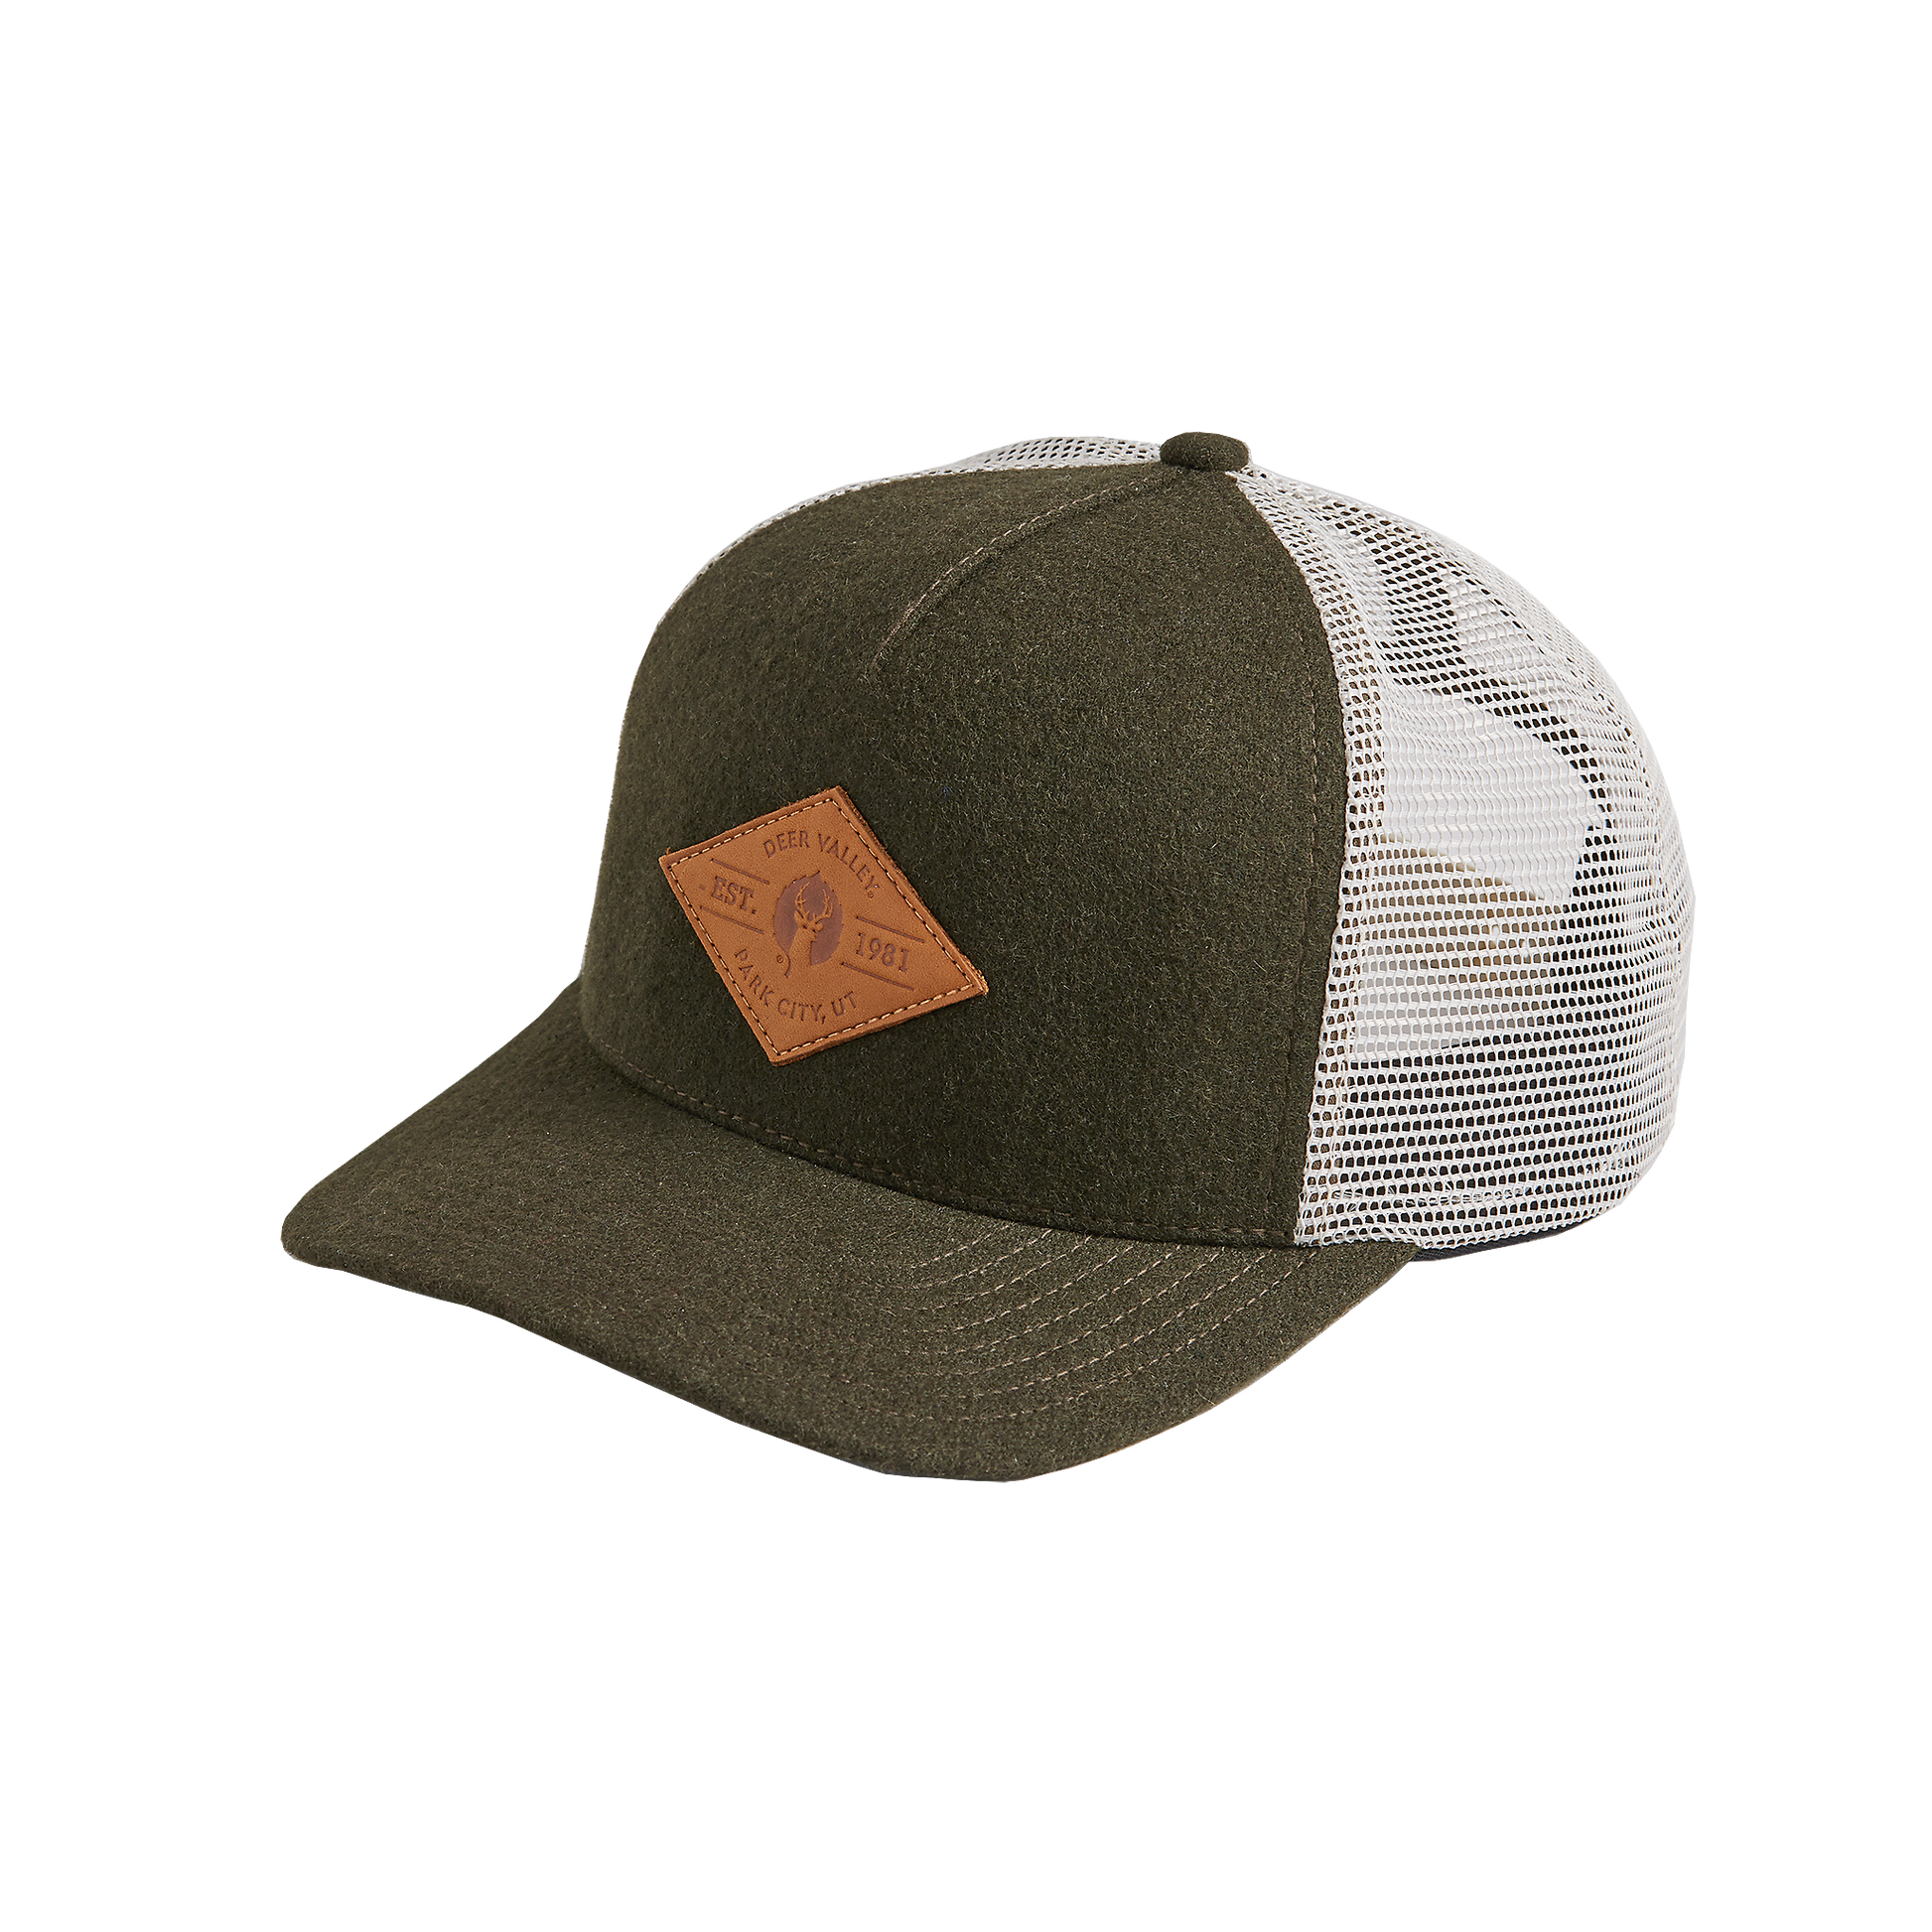 5 panel wool trucker hat with adjustable snapback